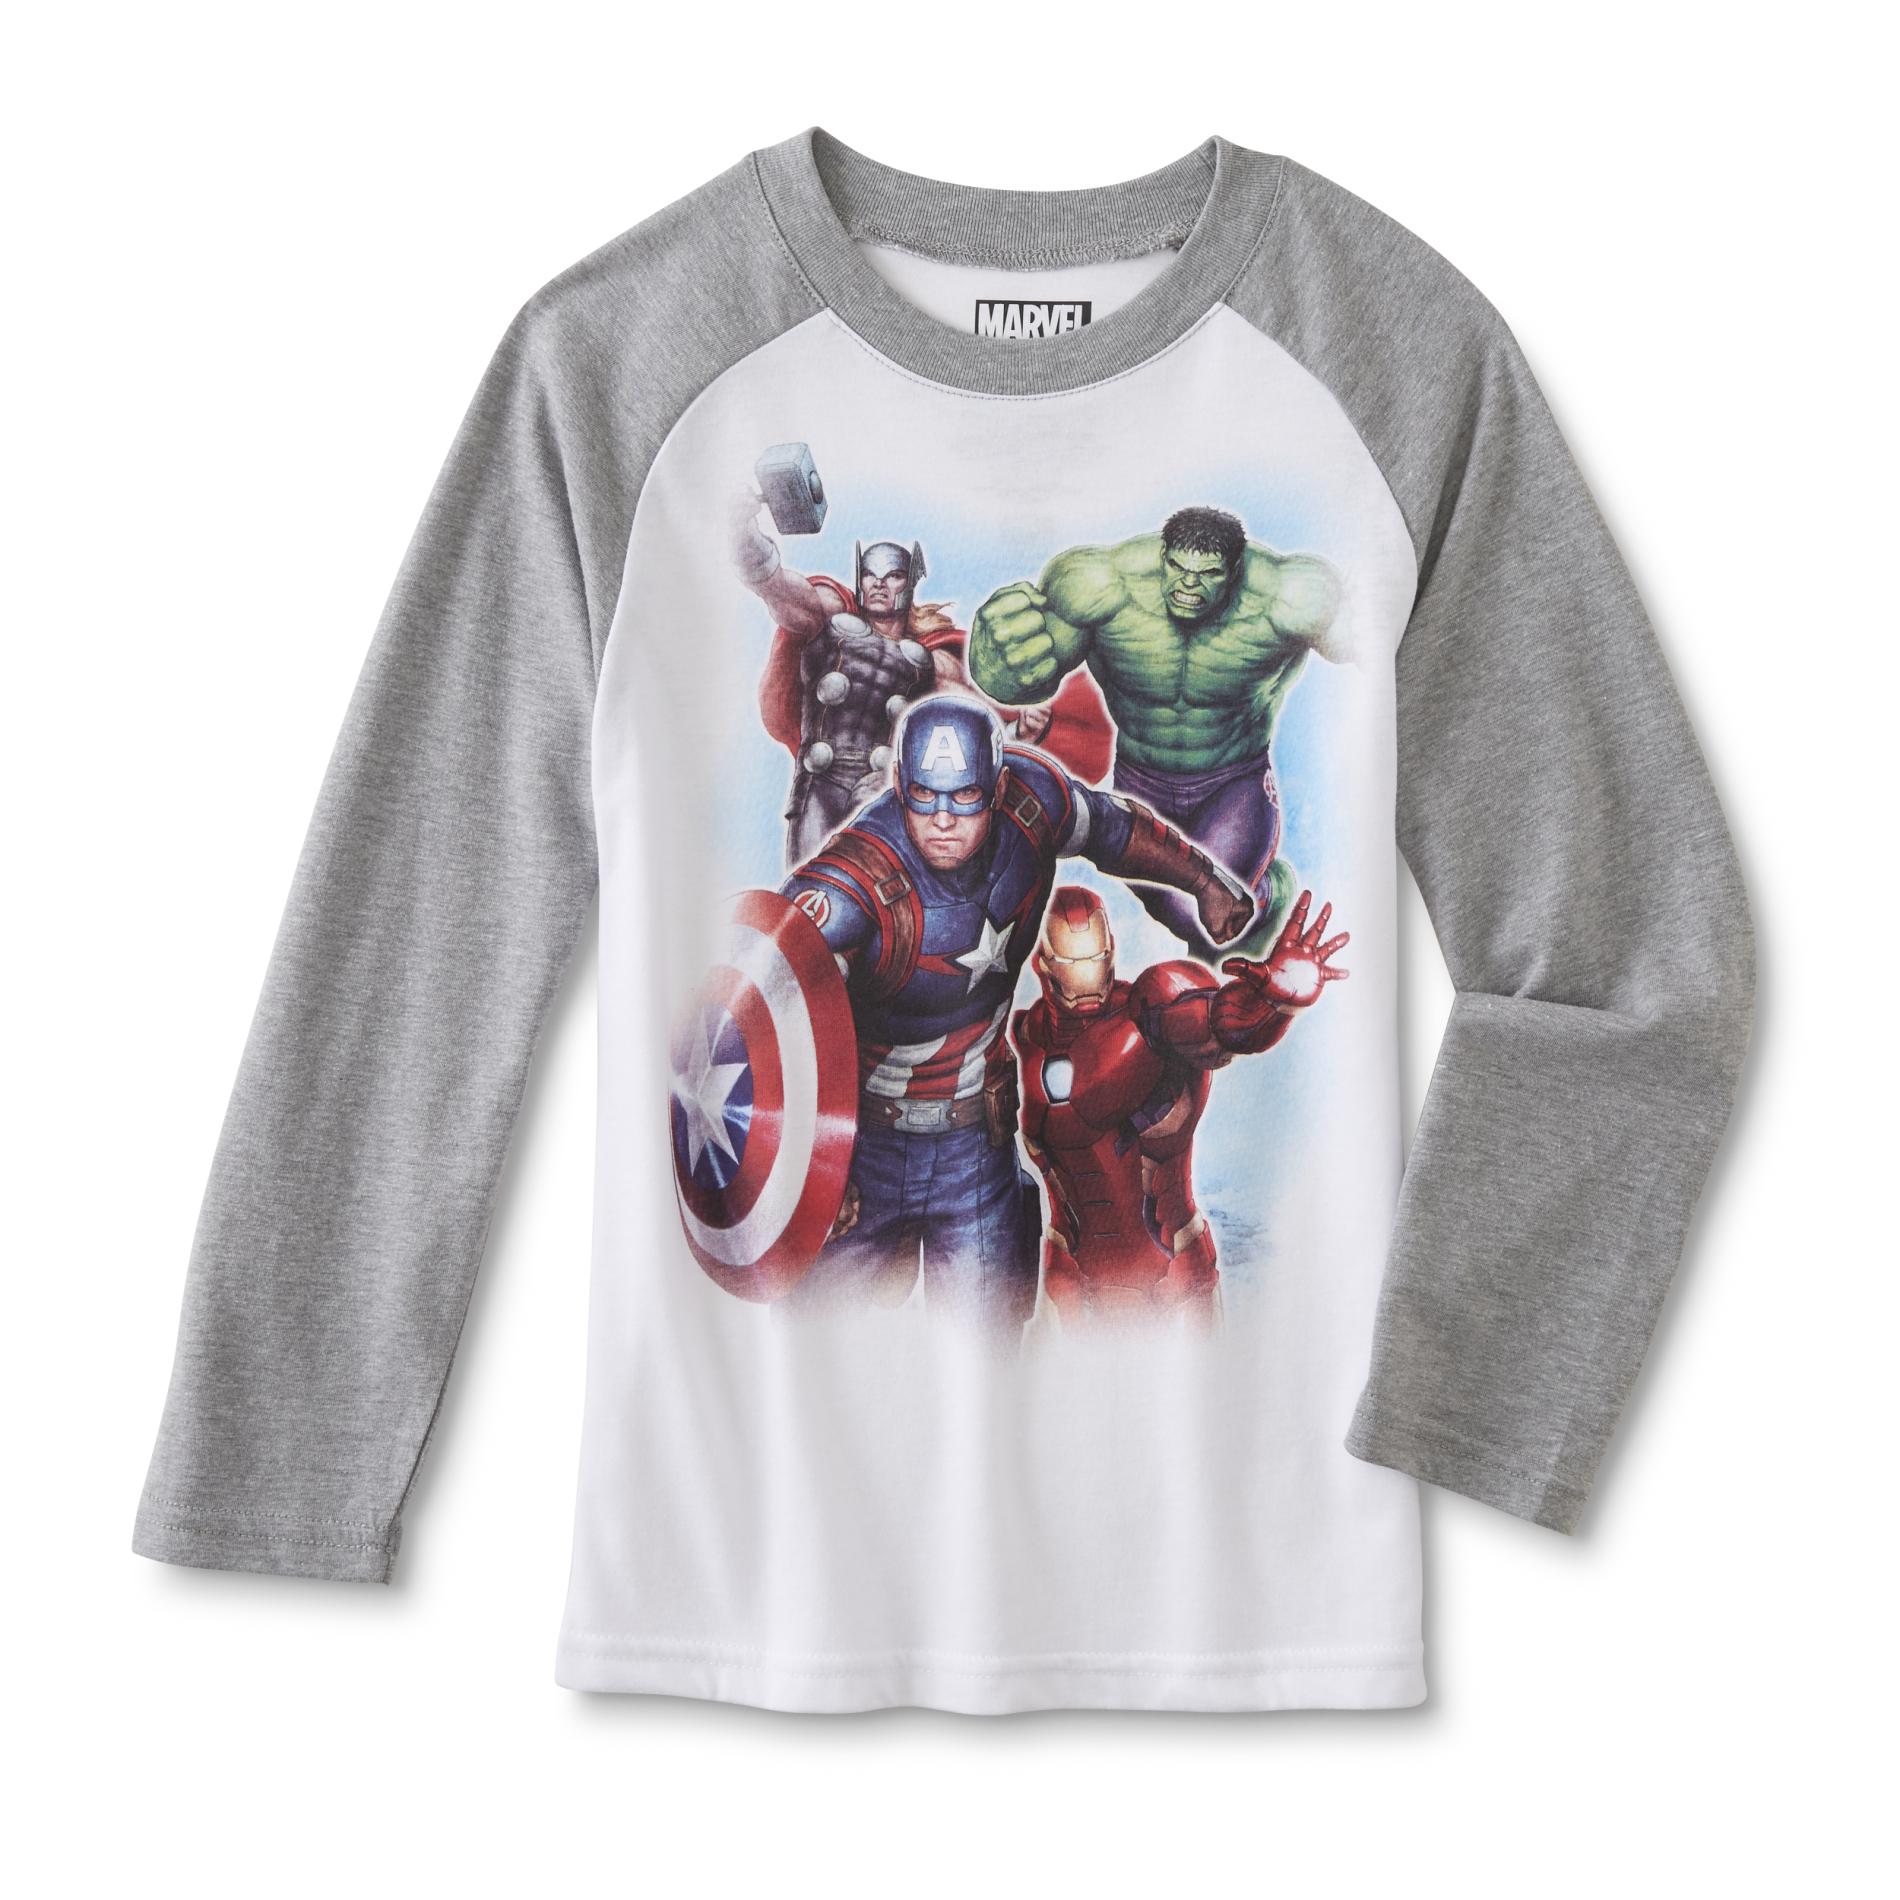 Marvel The Avengers Boys' Long-Sleeve Graphic T-Shirt